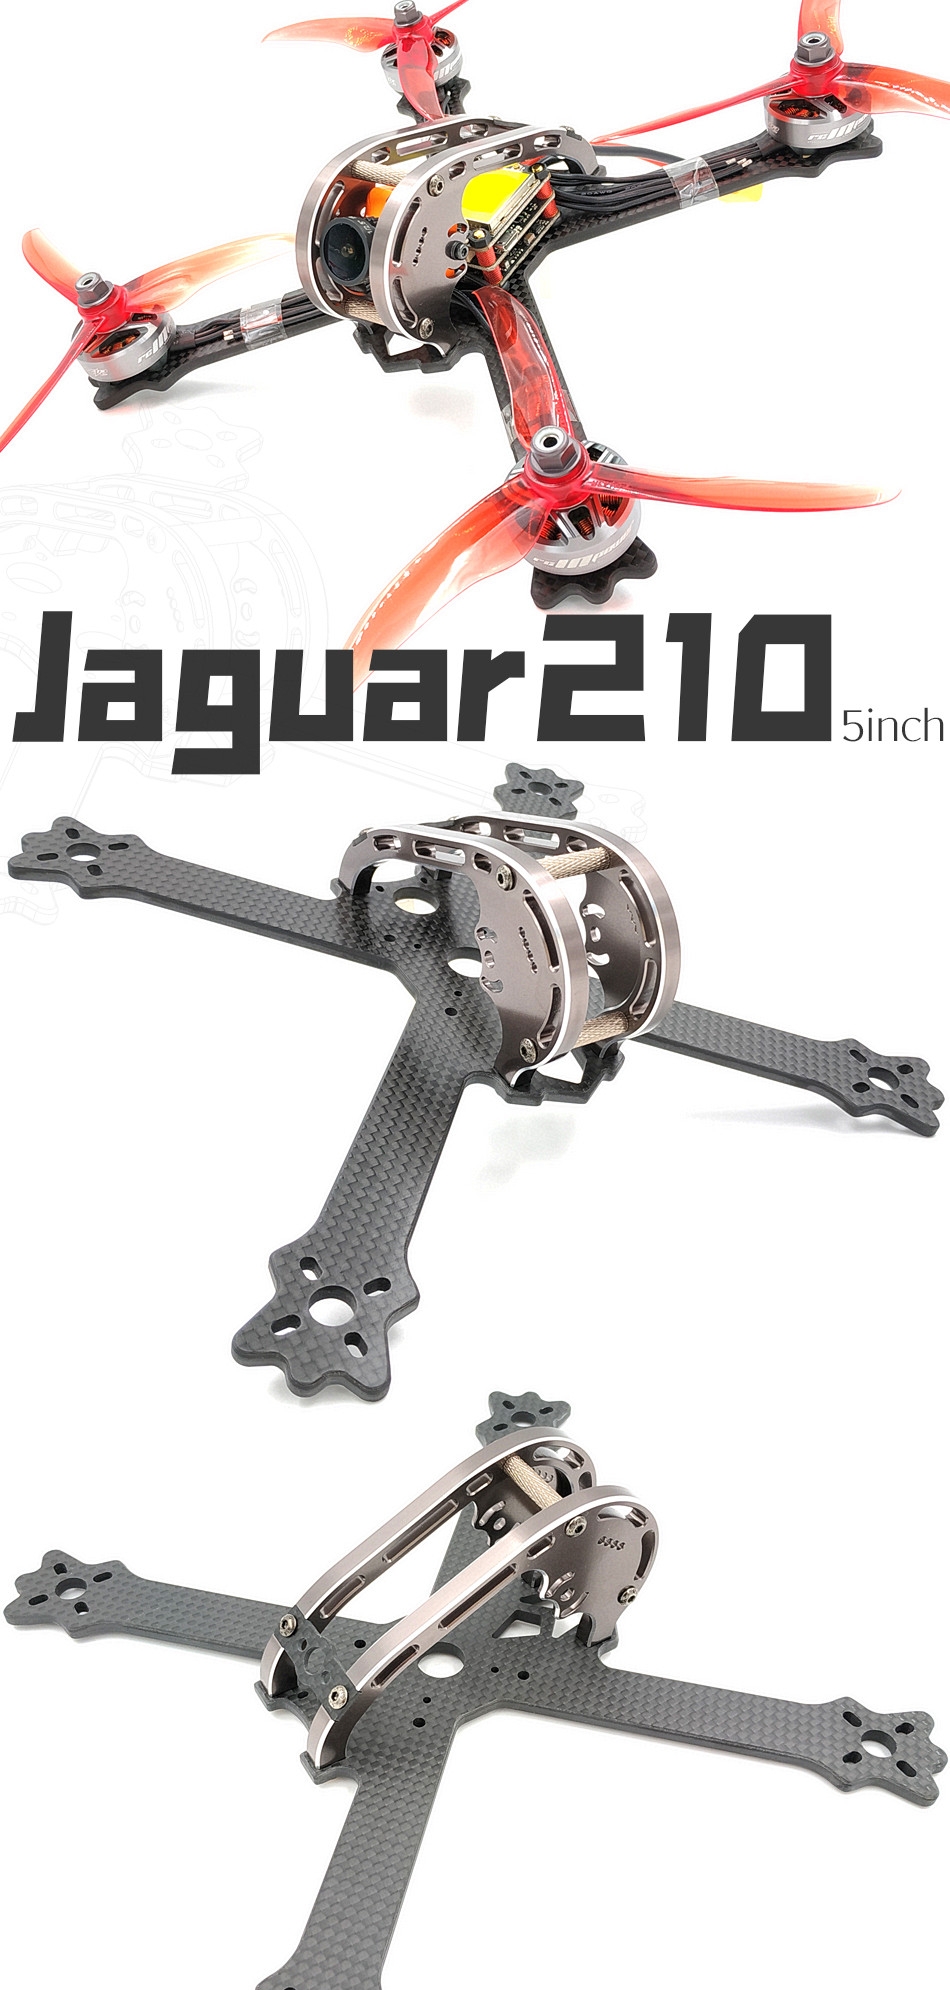 AlfaRC Jaguar210 210mm Wheelbase 4mm Arm 5 Inch 3K Carbon Fiber Frame Kit for RC Drone FPV Racing